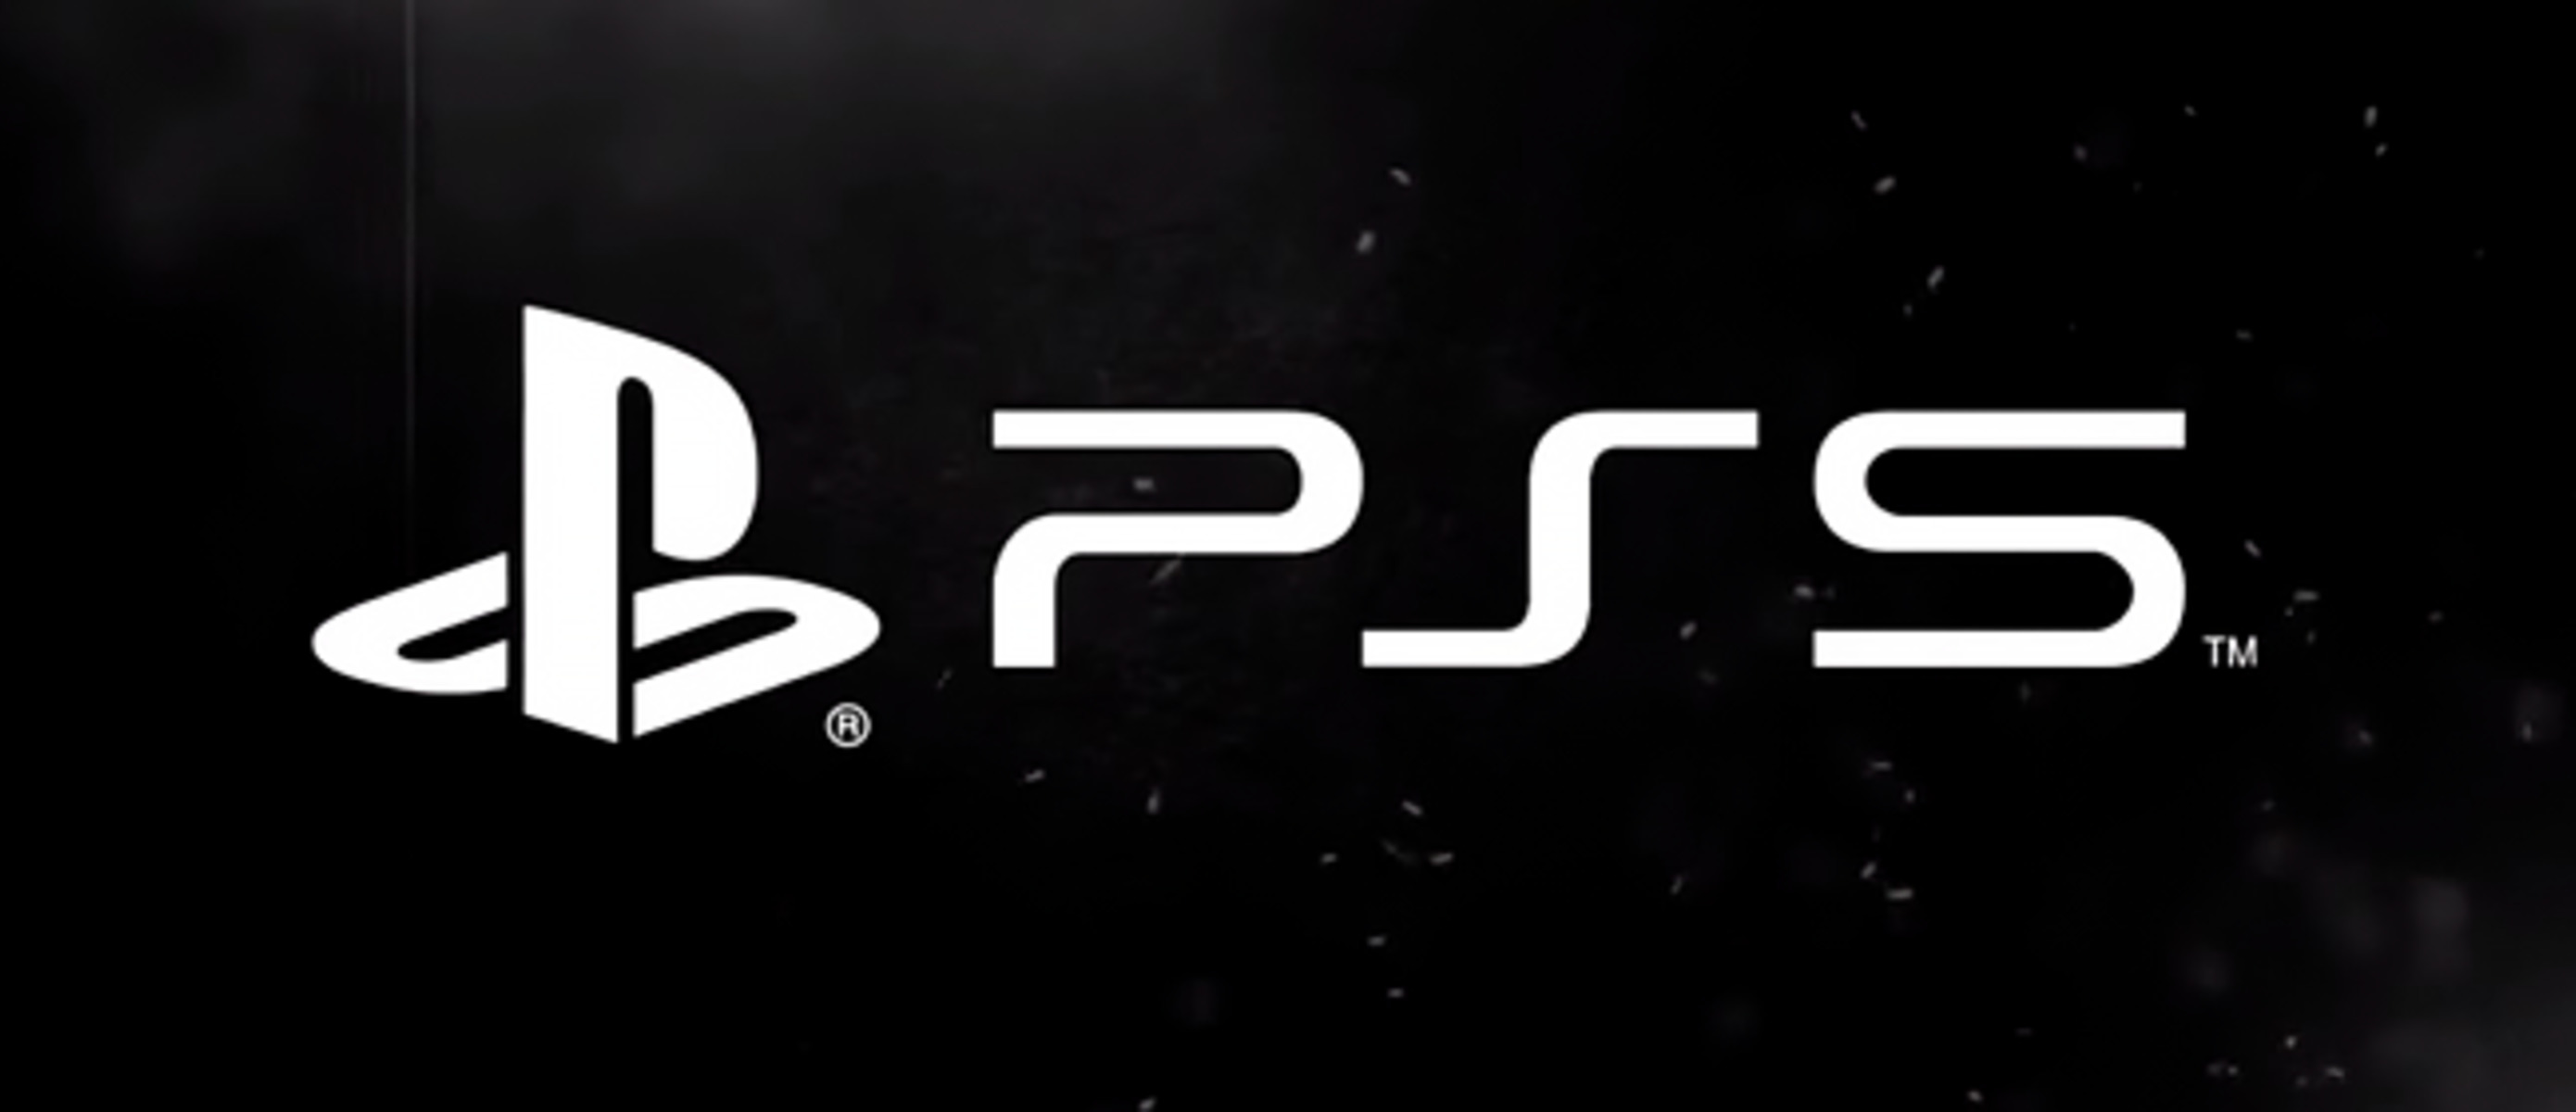 Название playstation. PLAYSTATION 5. Ps5 значок. Значок ПС 5. PLAYSTATION 5 лого.